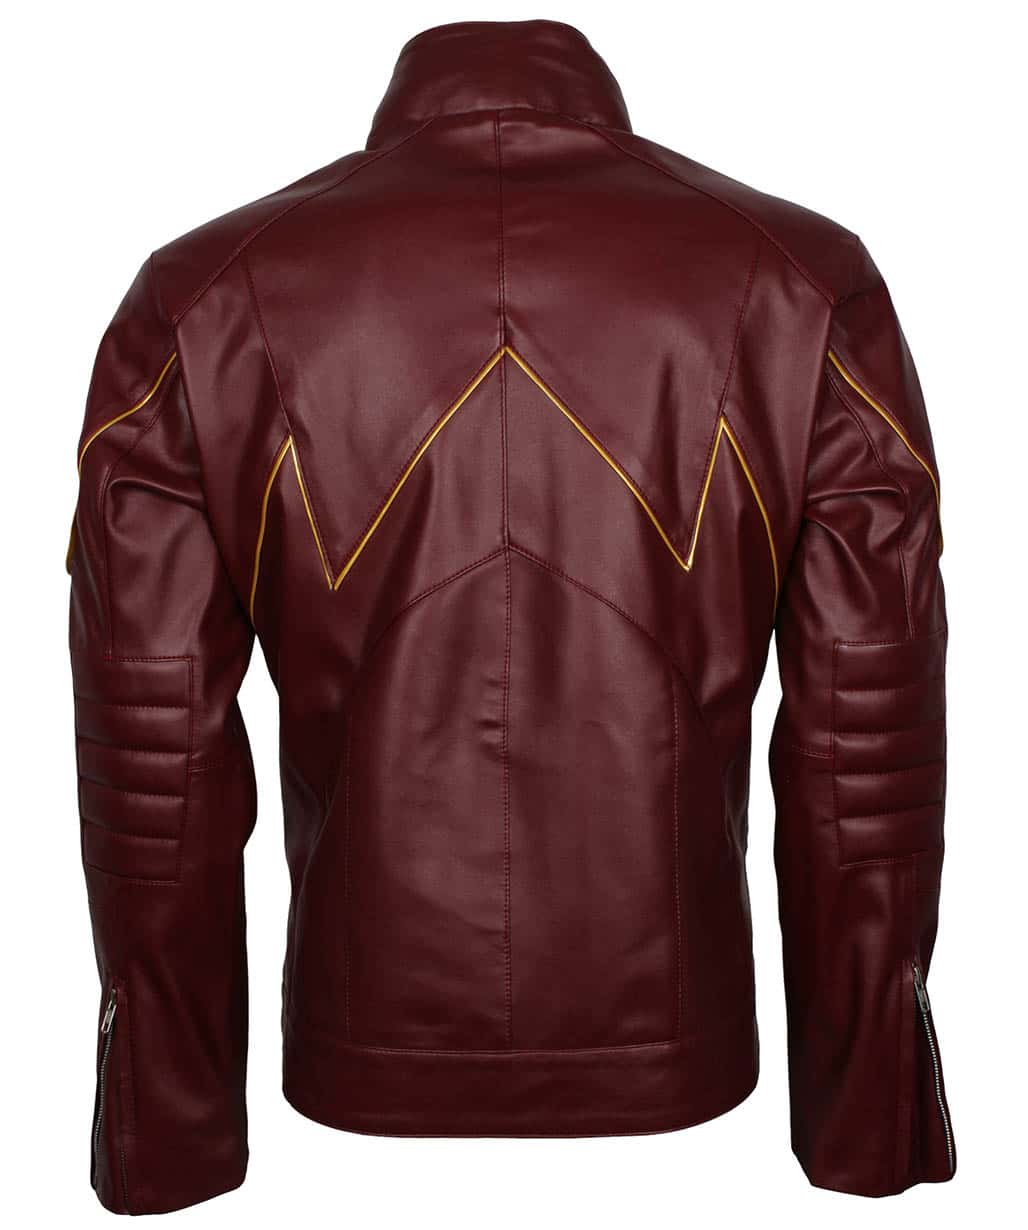 the-flash-barry-allen-grant-gustin-red-jacket-online-sale